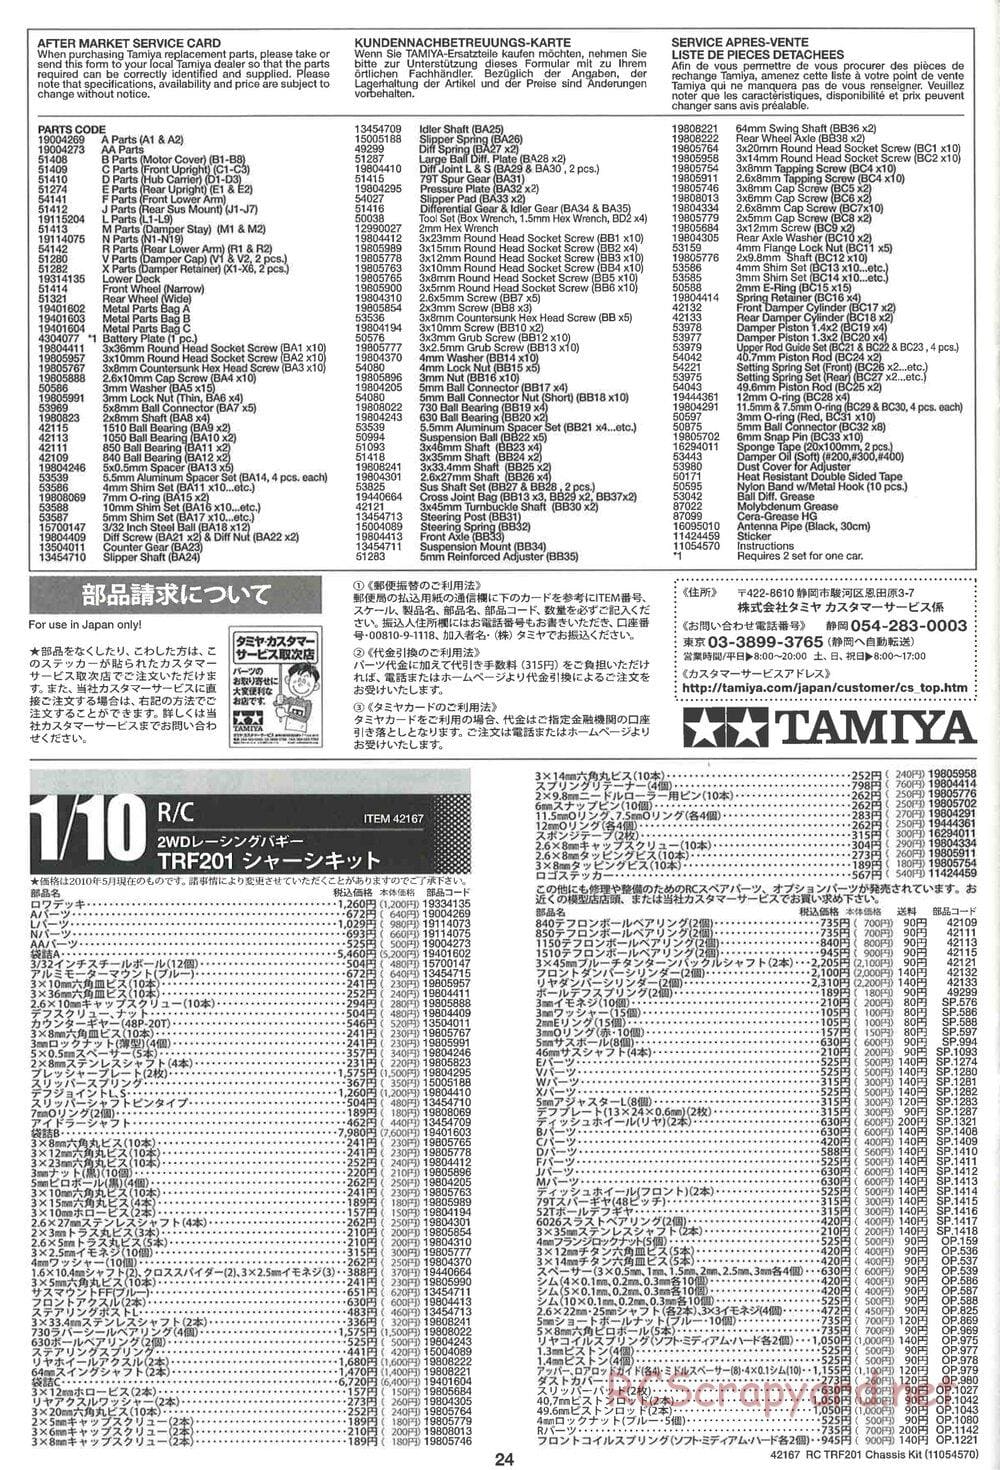 Tamiya - TRF201 Chassis - Manual - Page 24